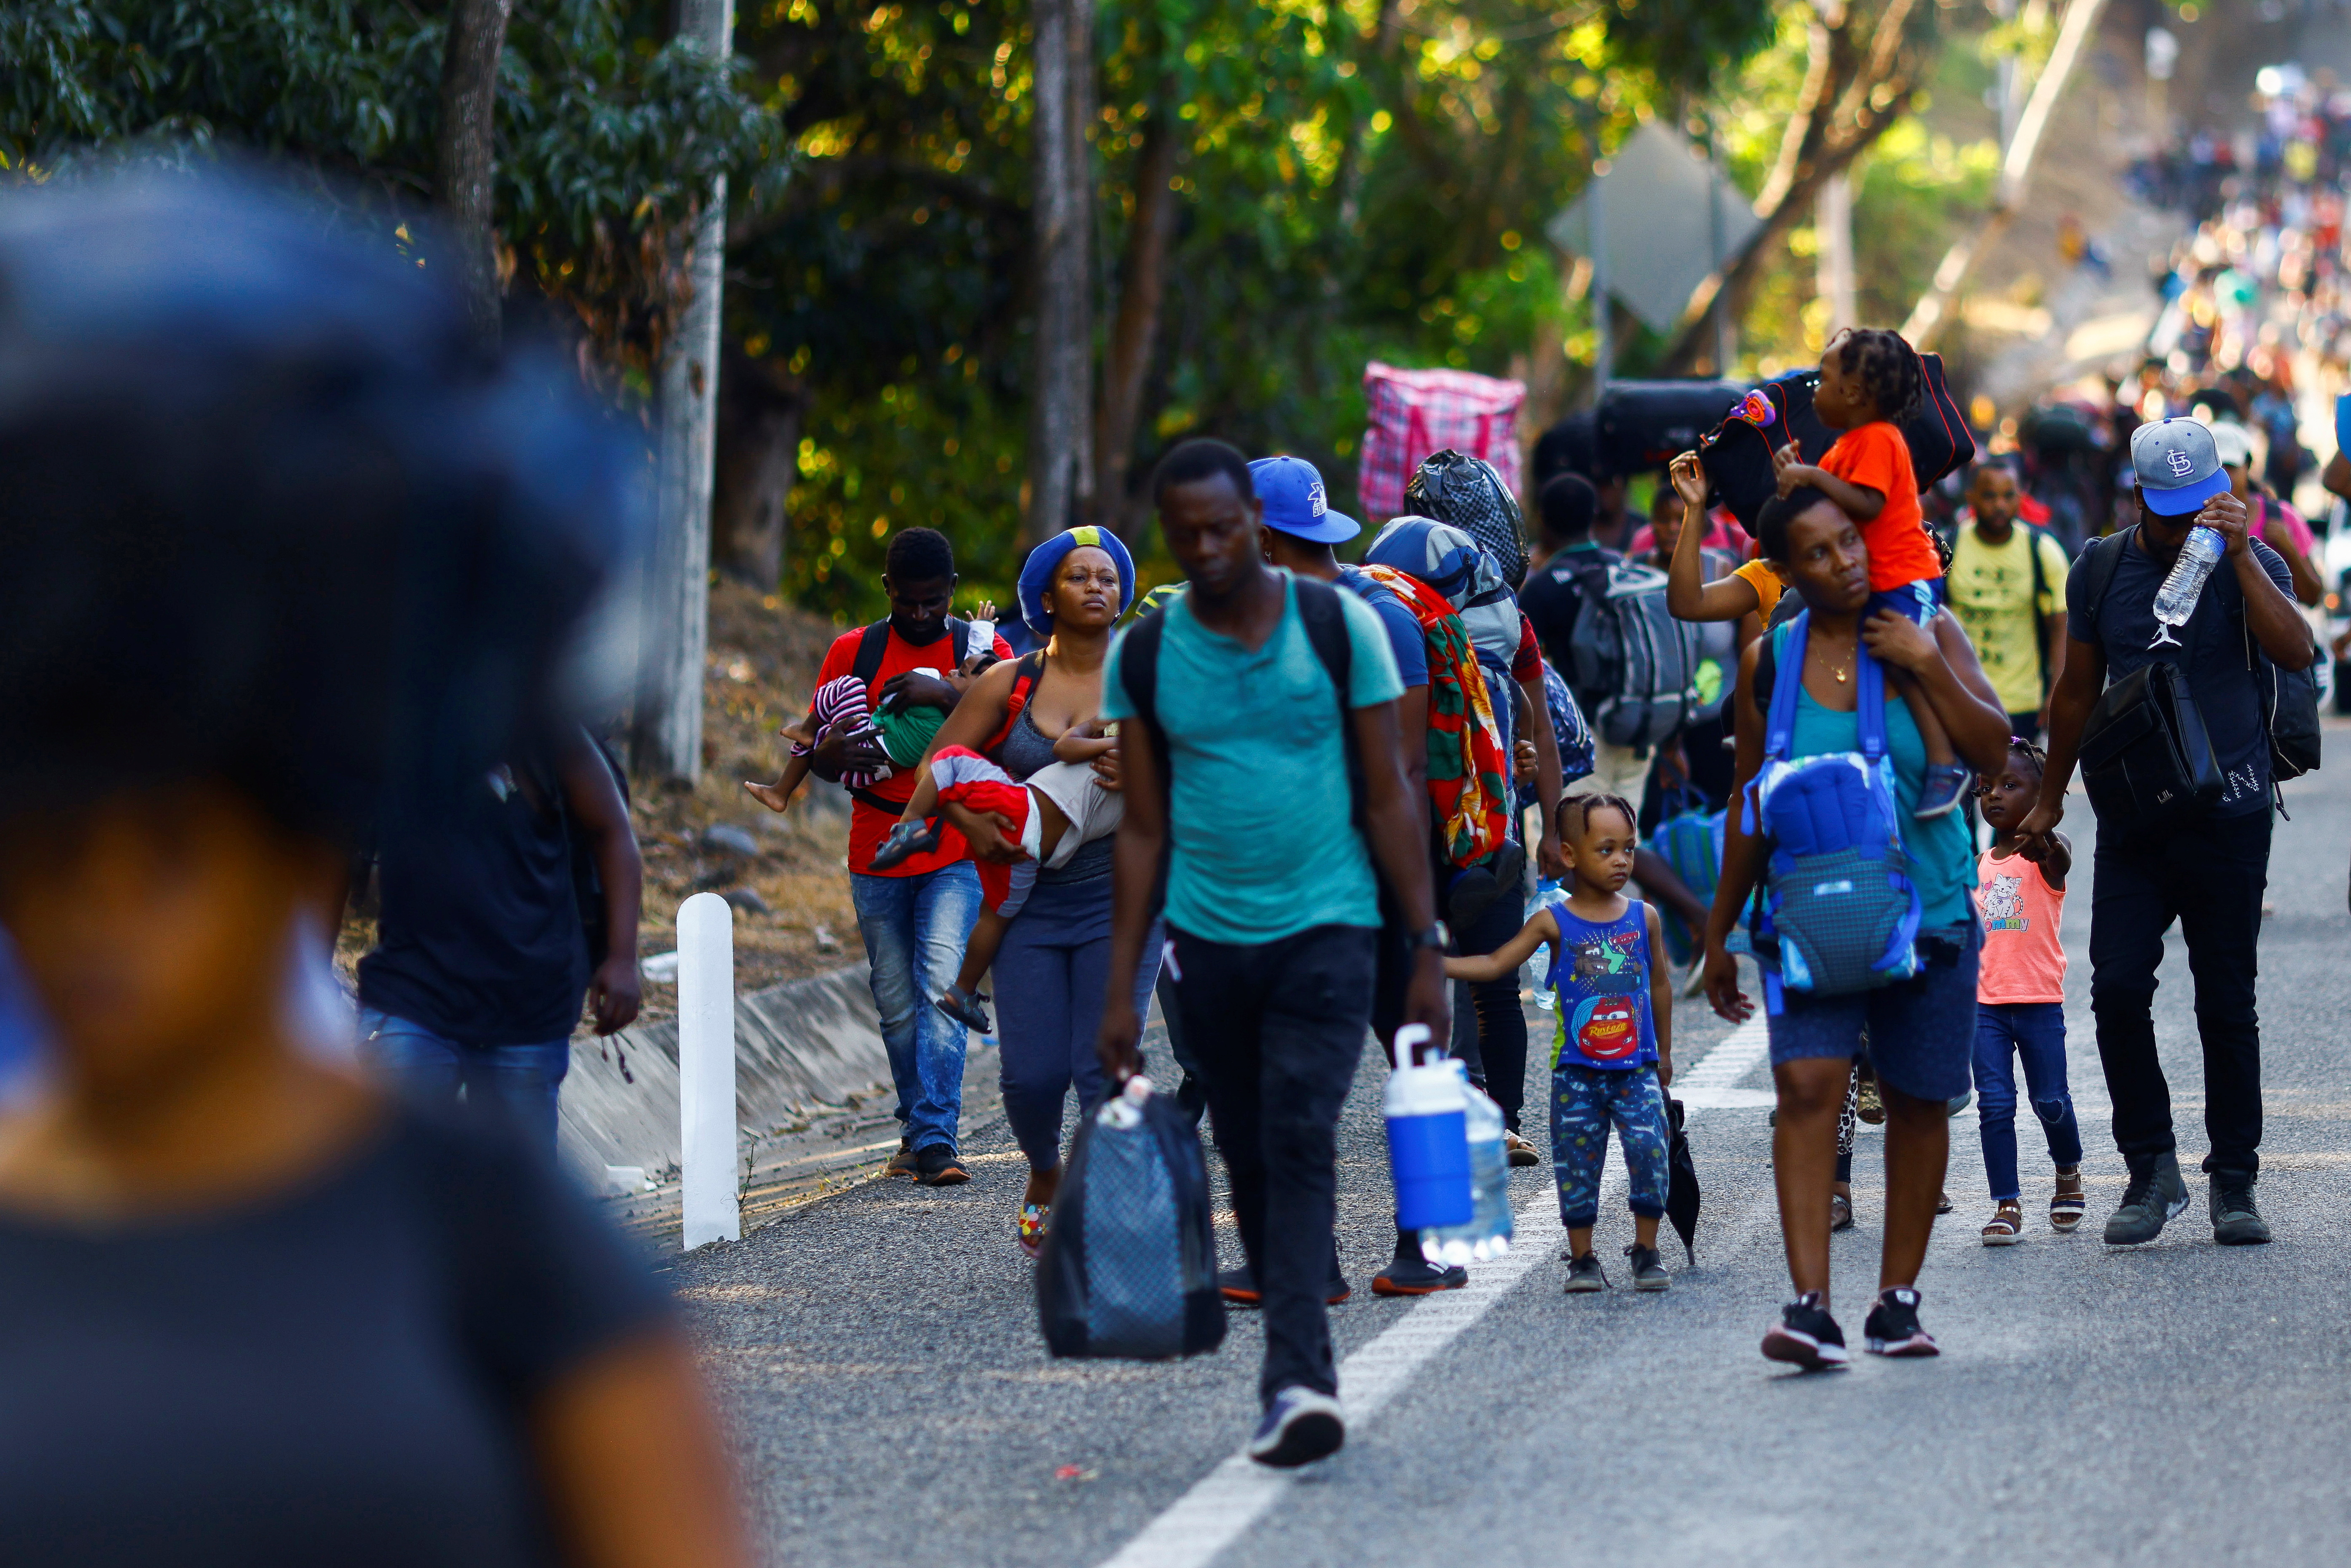 Migrants walk as they take part in a caravan heading to the U.S. border, near Huehuetan, Mexico November 29, 2021. REUTERS/Jose Luis Gonzalez